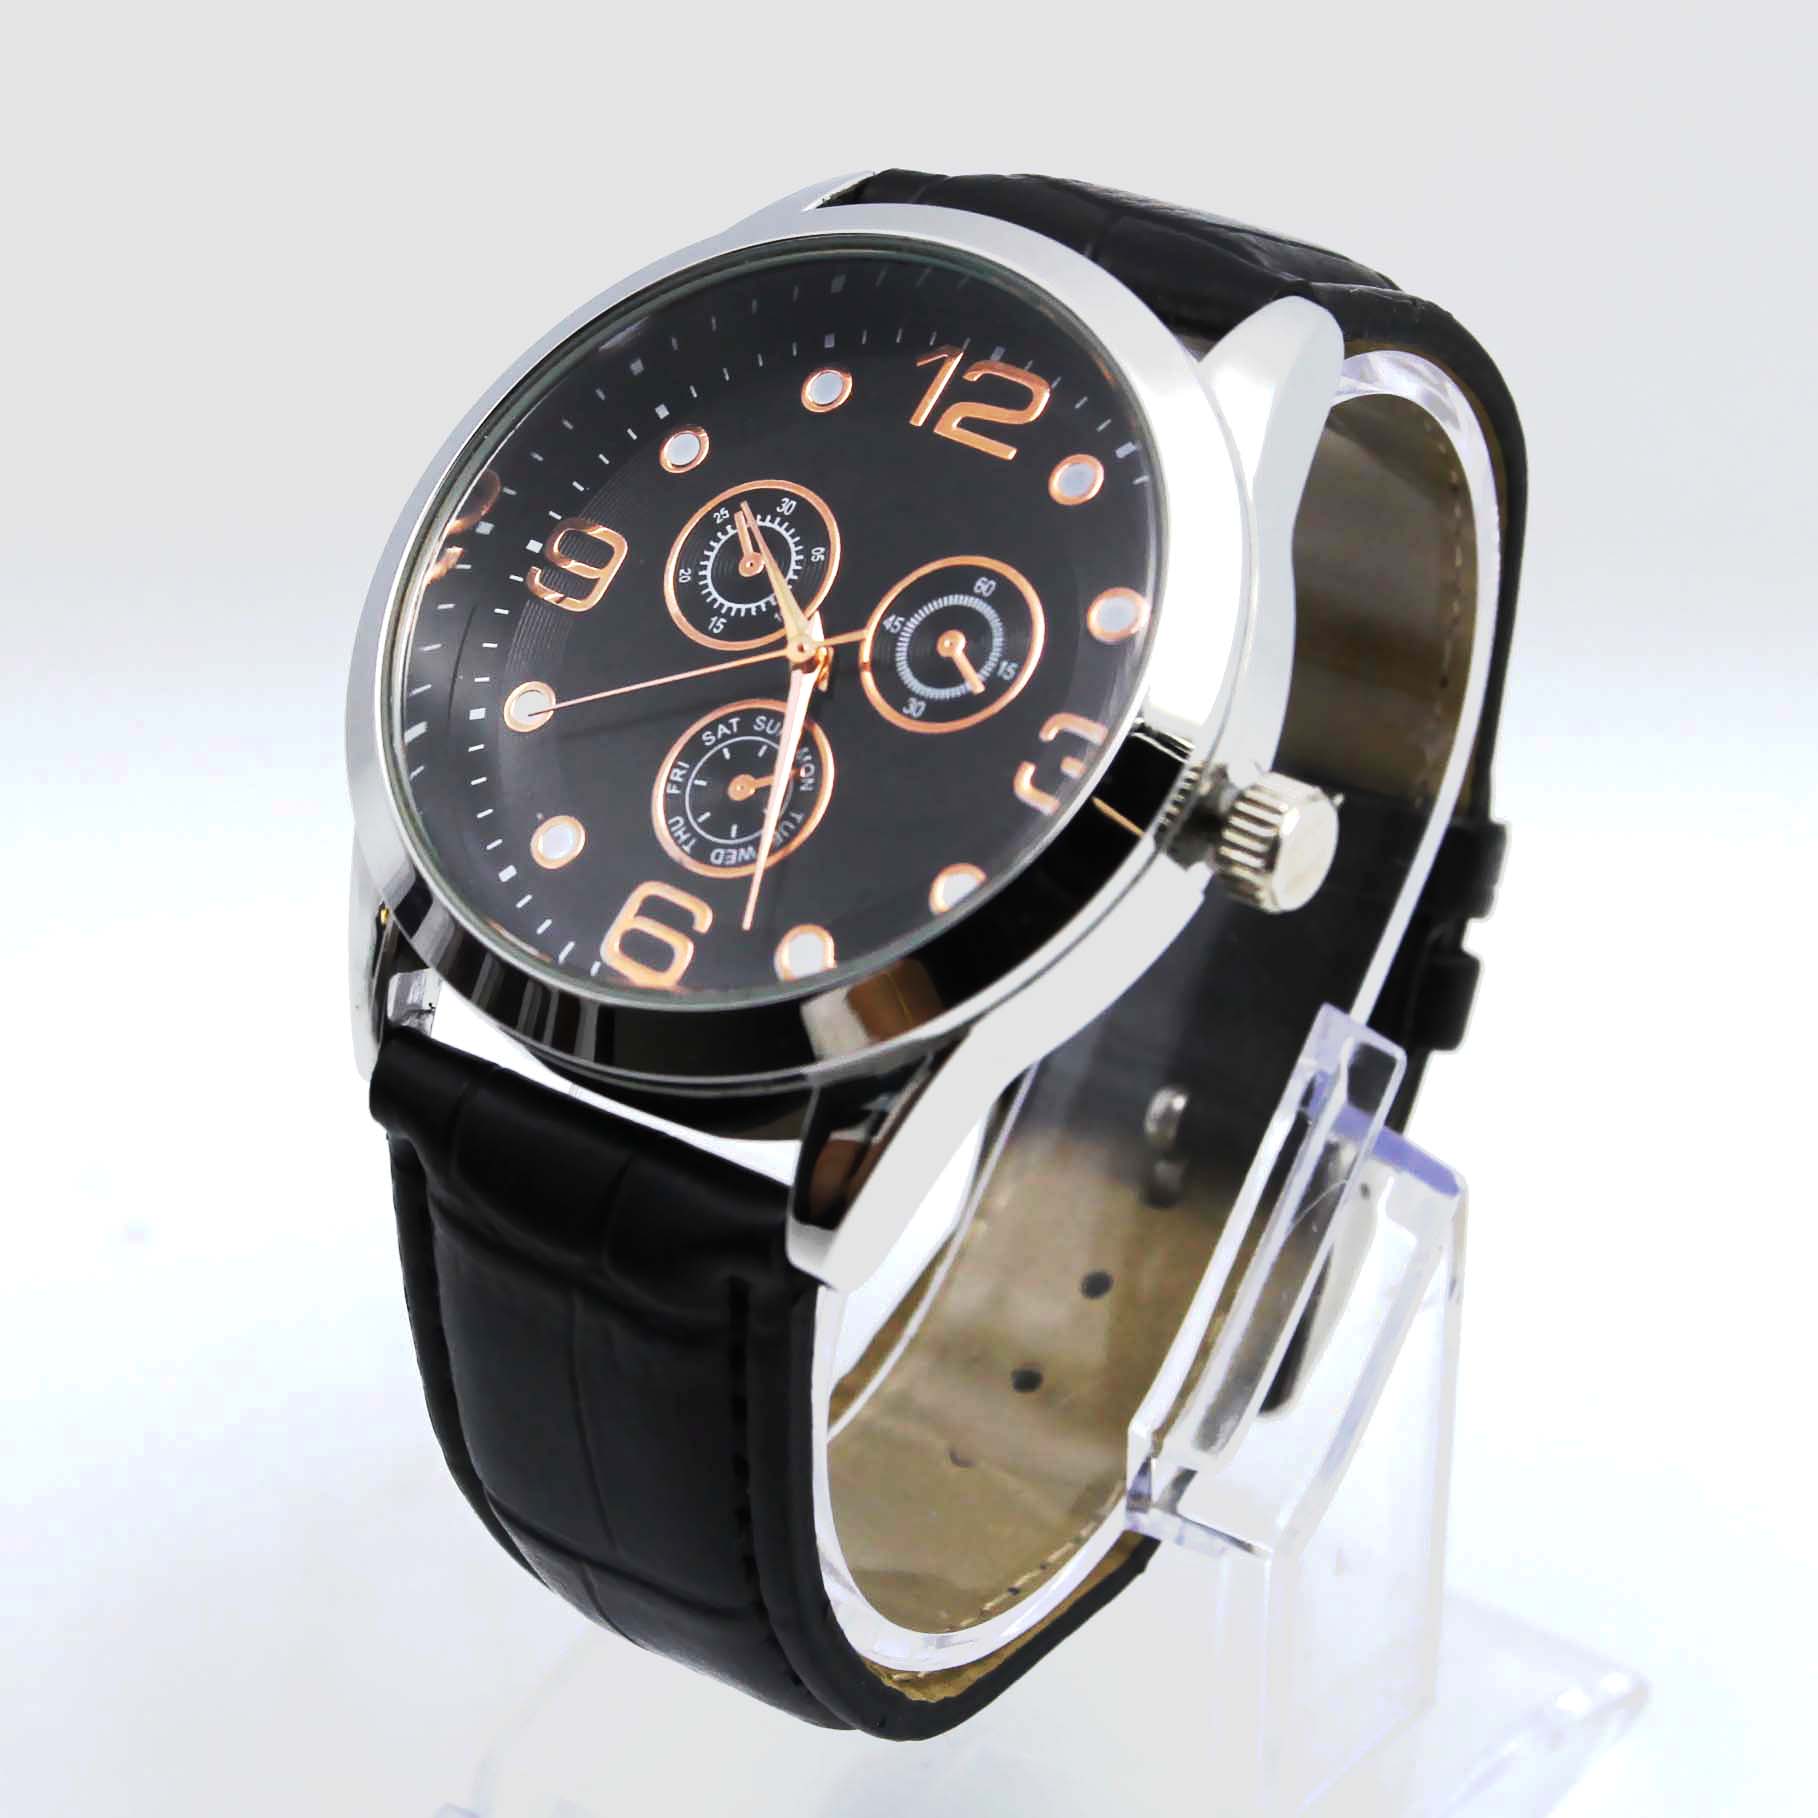 #02109Men's wristwatch quartz analog leather strap watch